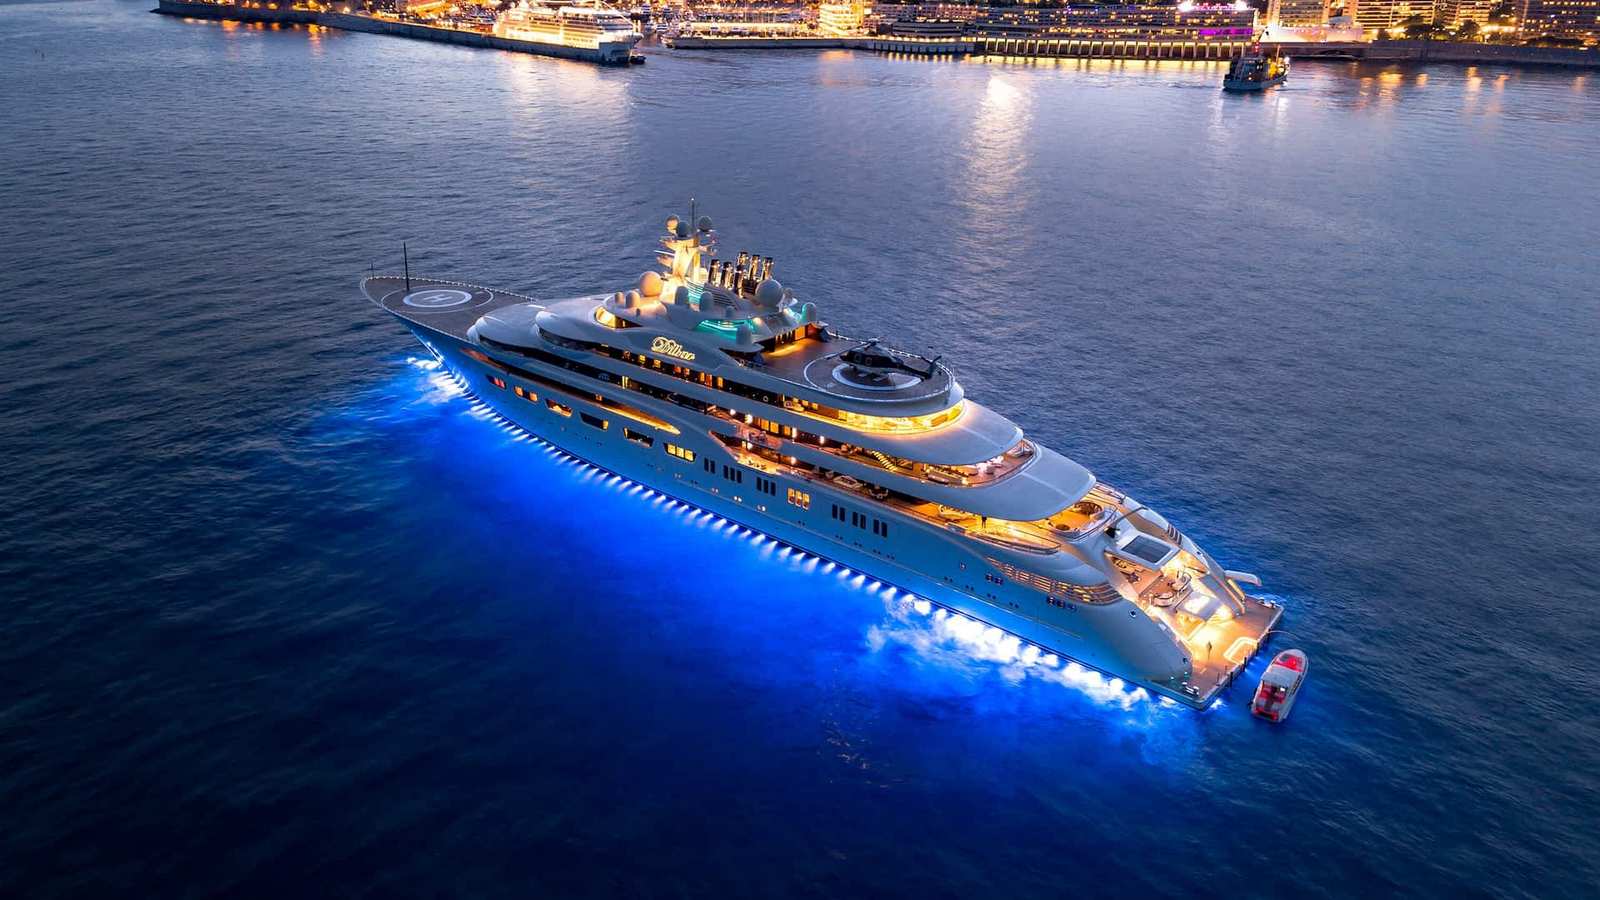 russian luxury yacht seized